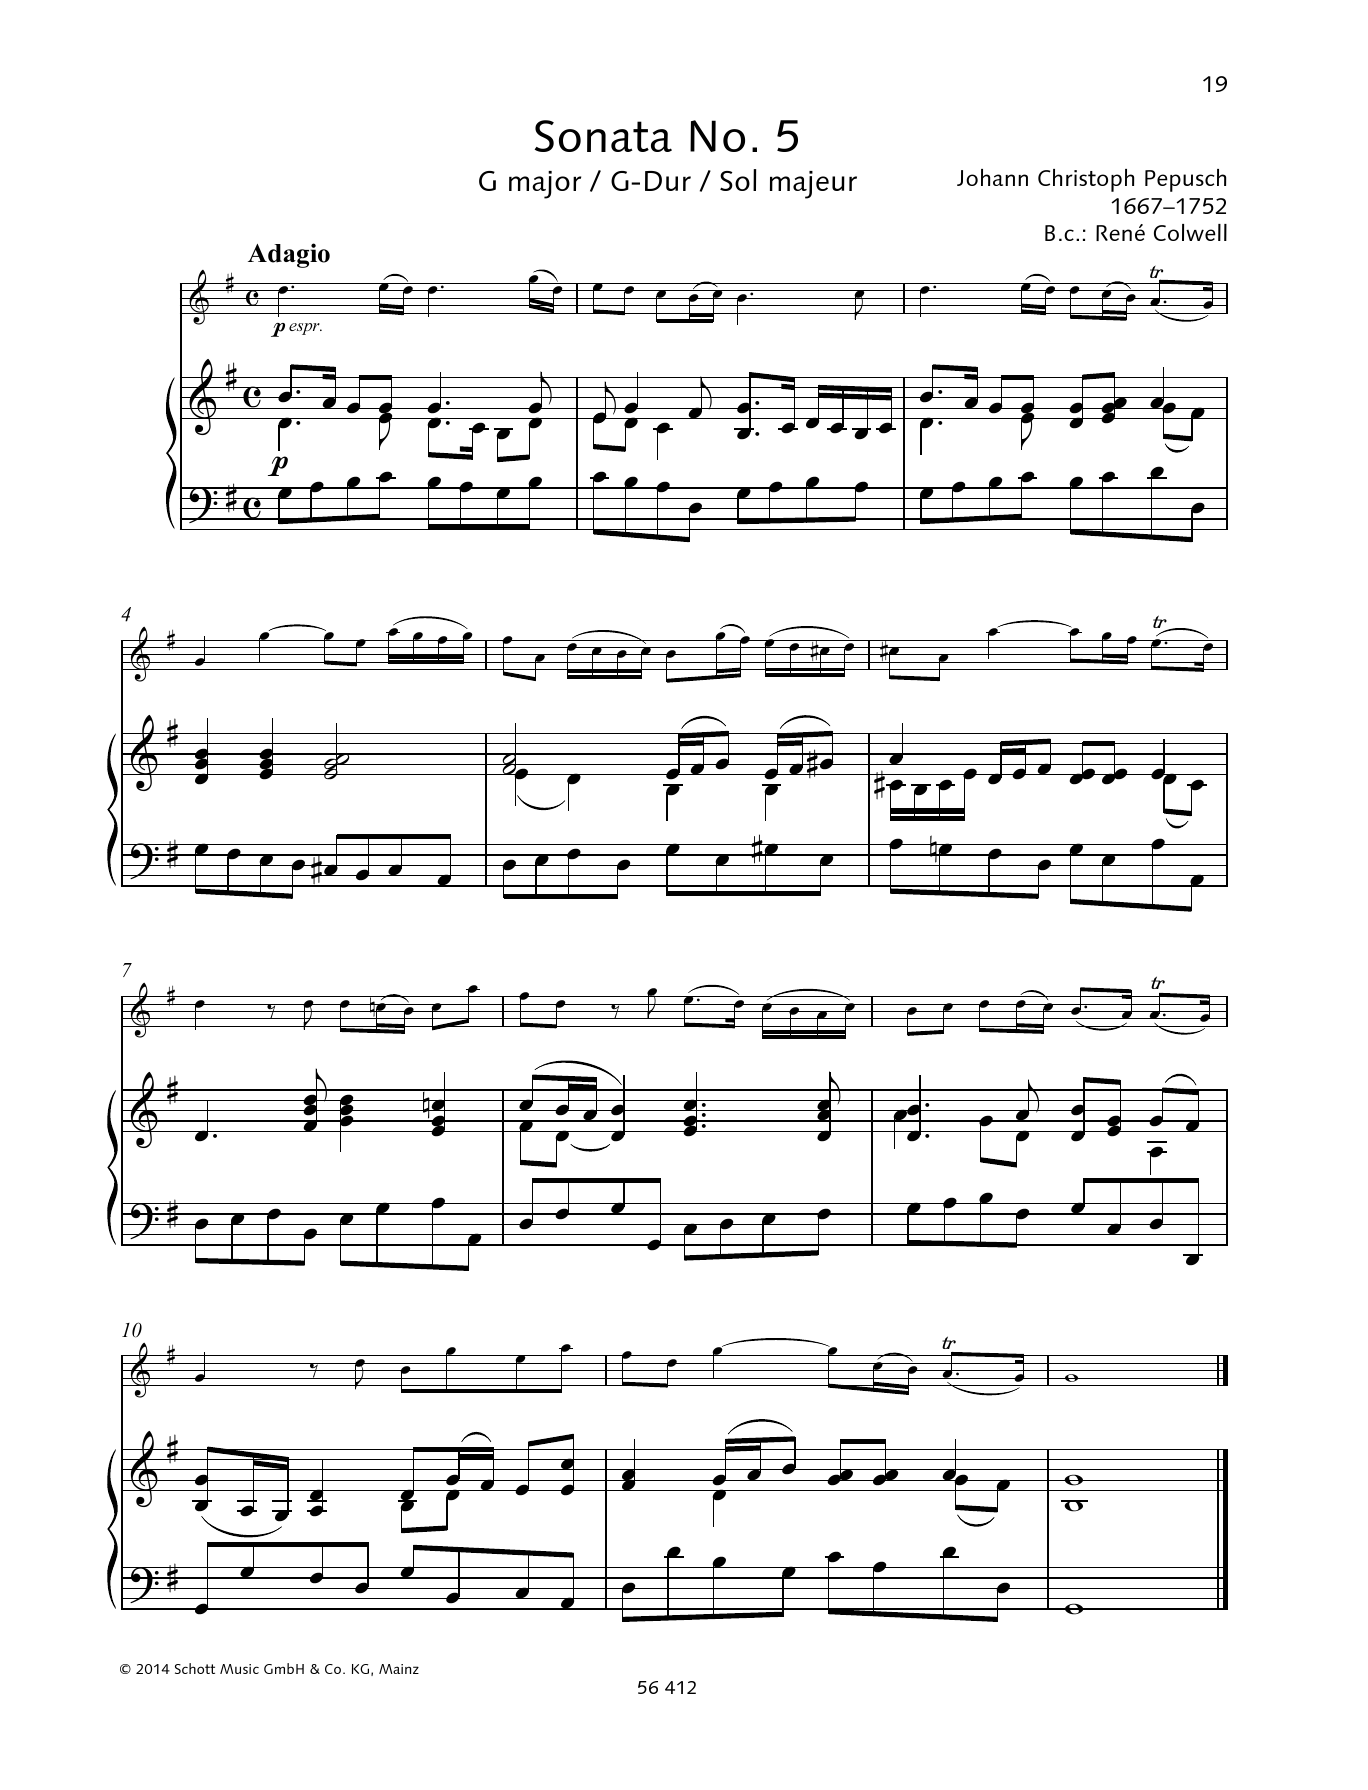 Download Baldassare Galuppi Sonata No. 5 G major Sheet Music